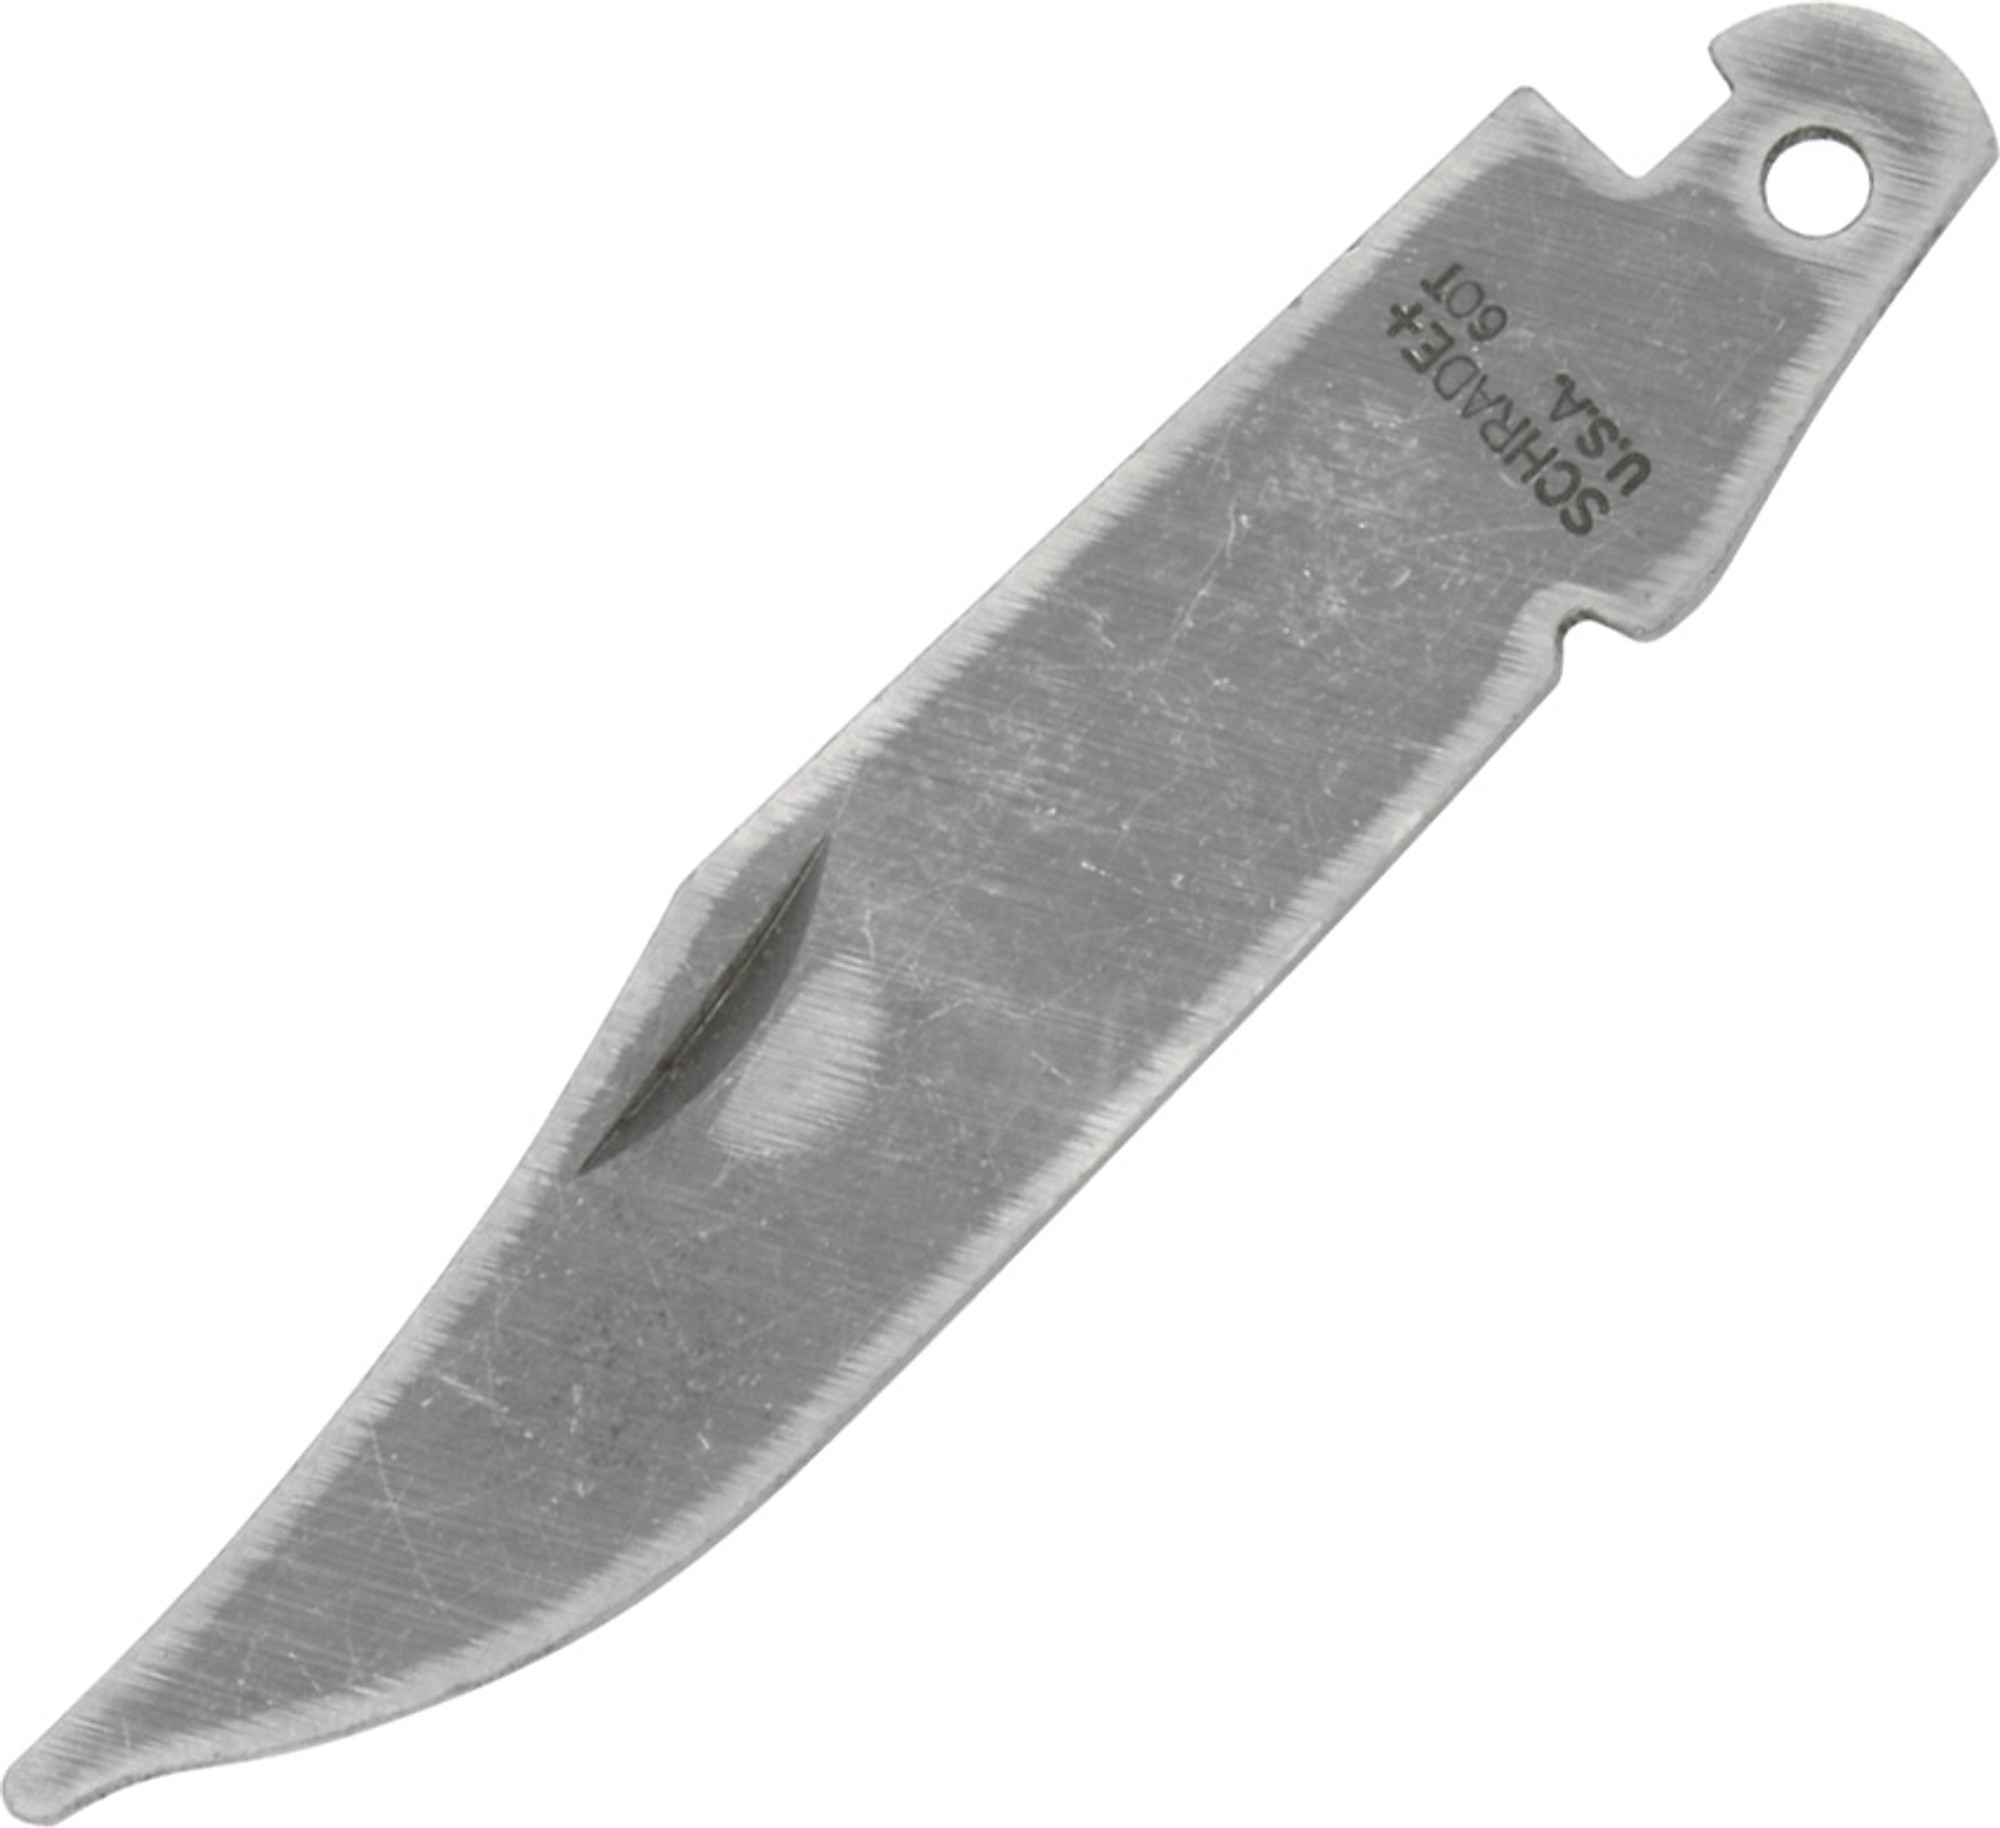 Knife Blade Schrade Folding BL686